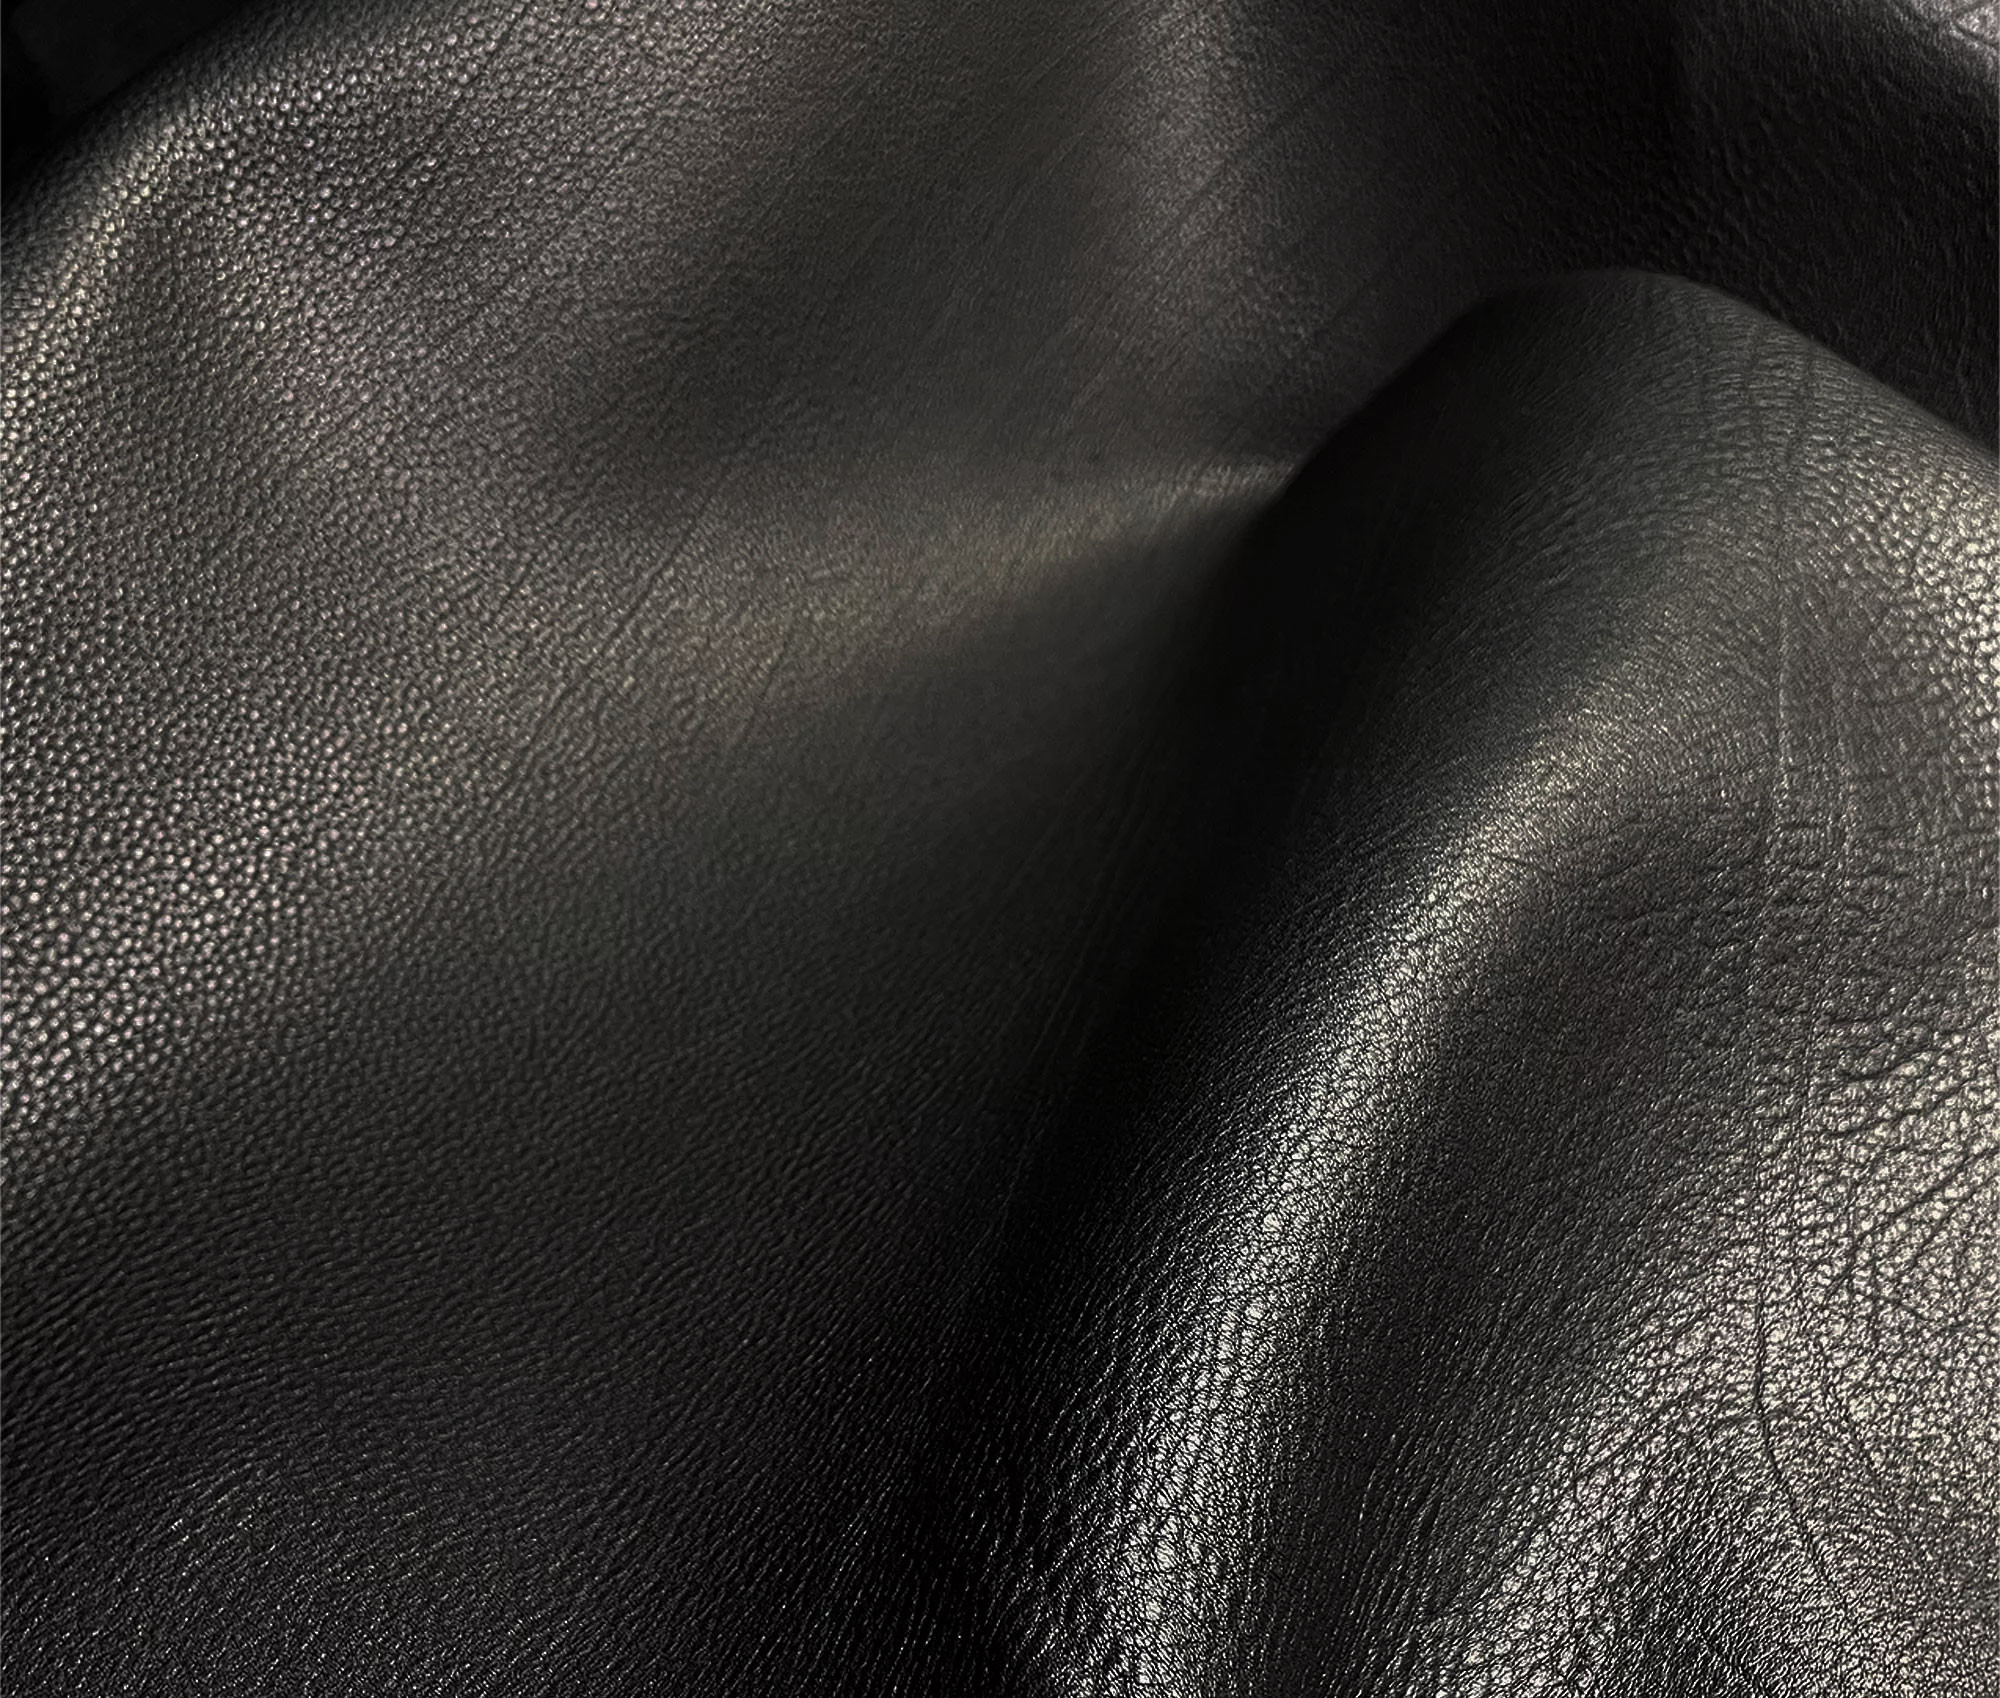 Half Calf leather - Natural grain - Black